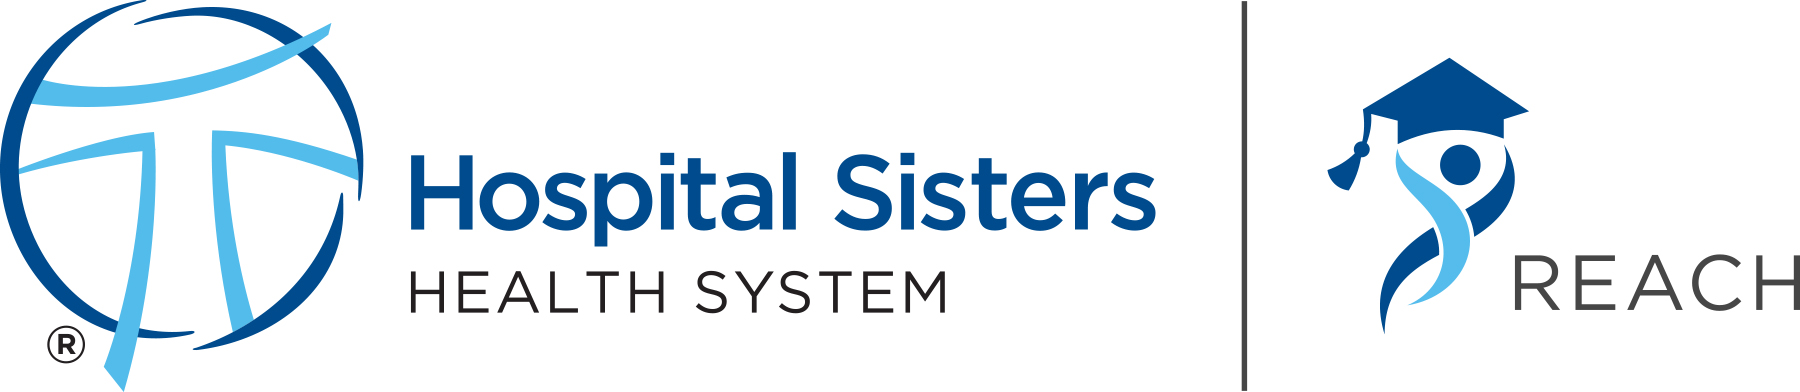 Hospital Sisters Health System. REACH.